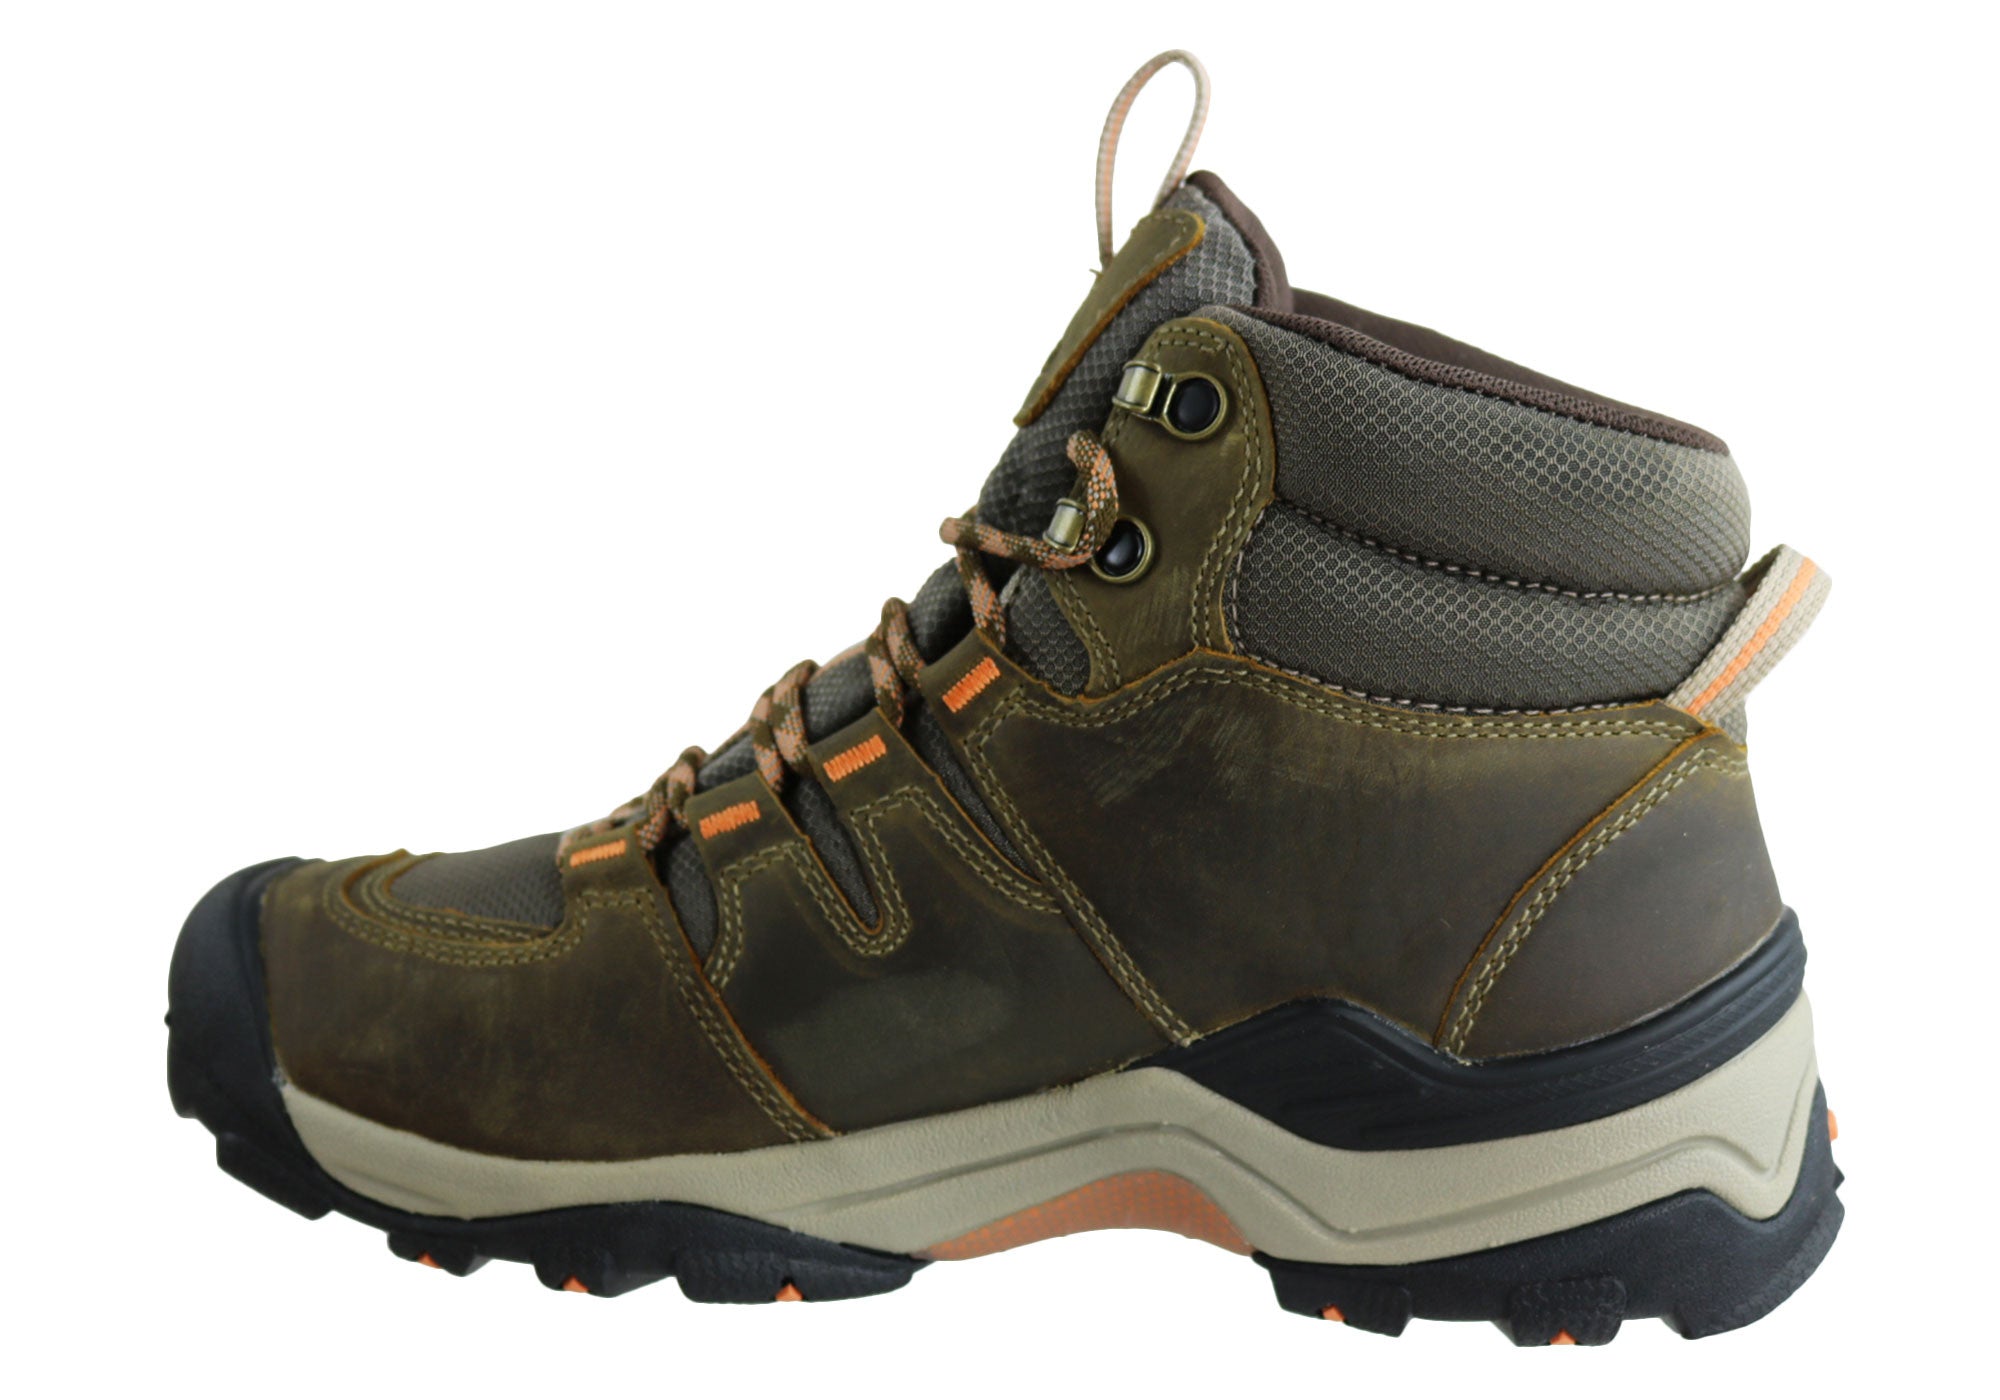 Keen Gypsum II Mid Waterproof Womens Wide Fit Hiking Boots | Brand ...